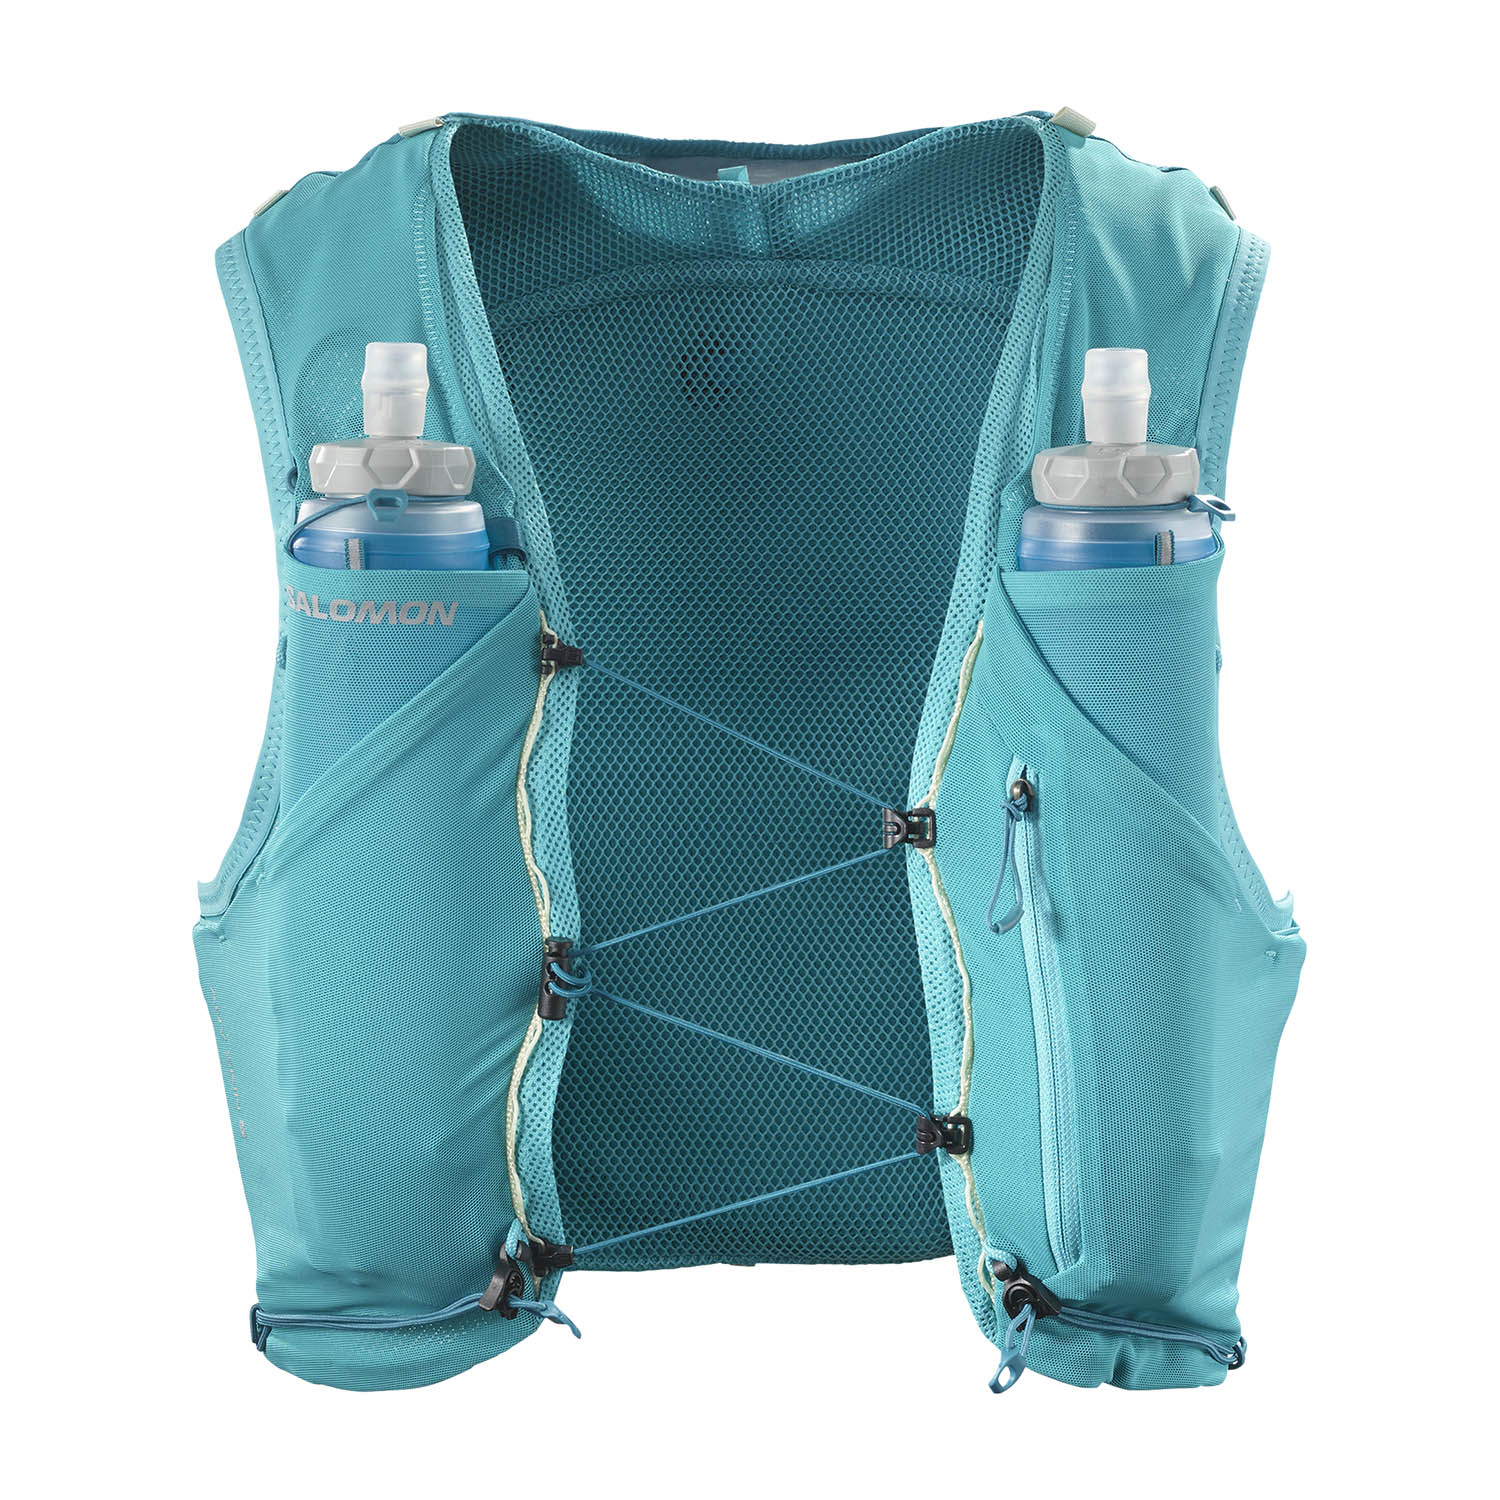 Salomon ADV Skin 5 Set Backpack - Tahitian Tide/Peacock Blue